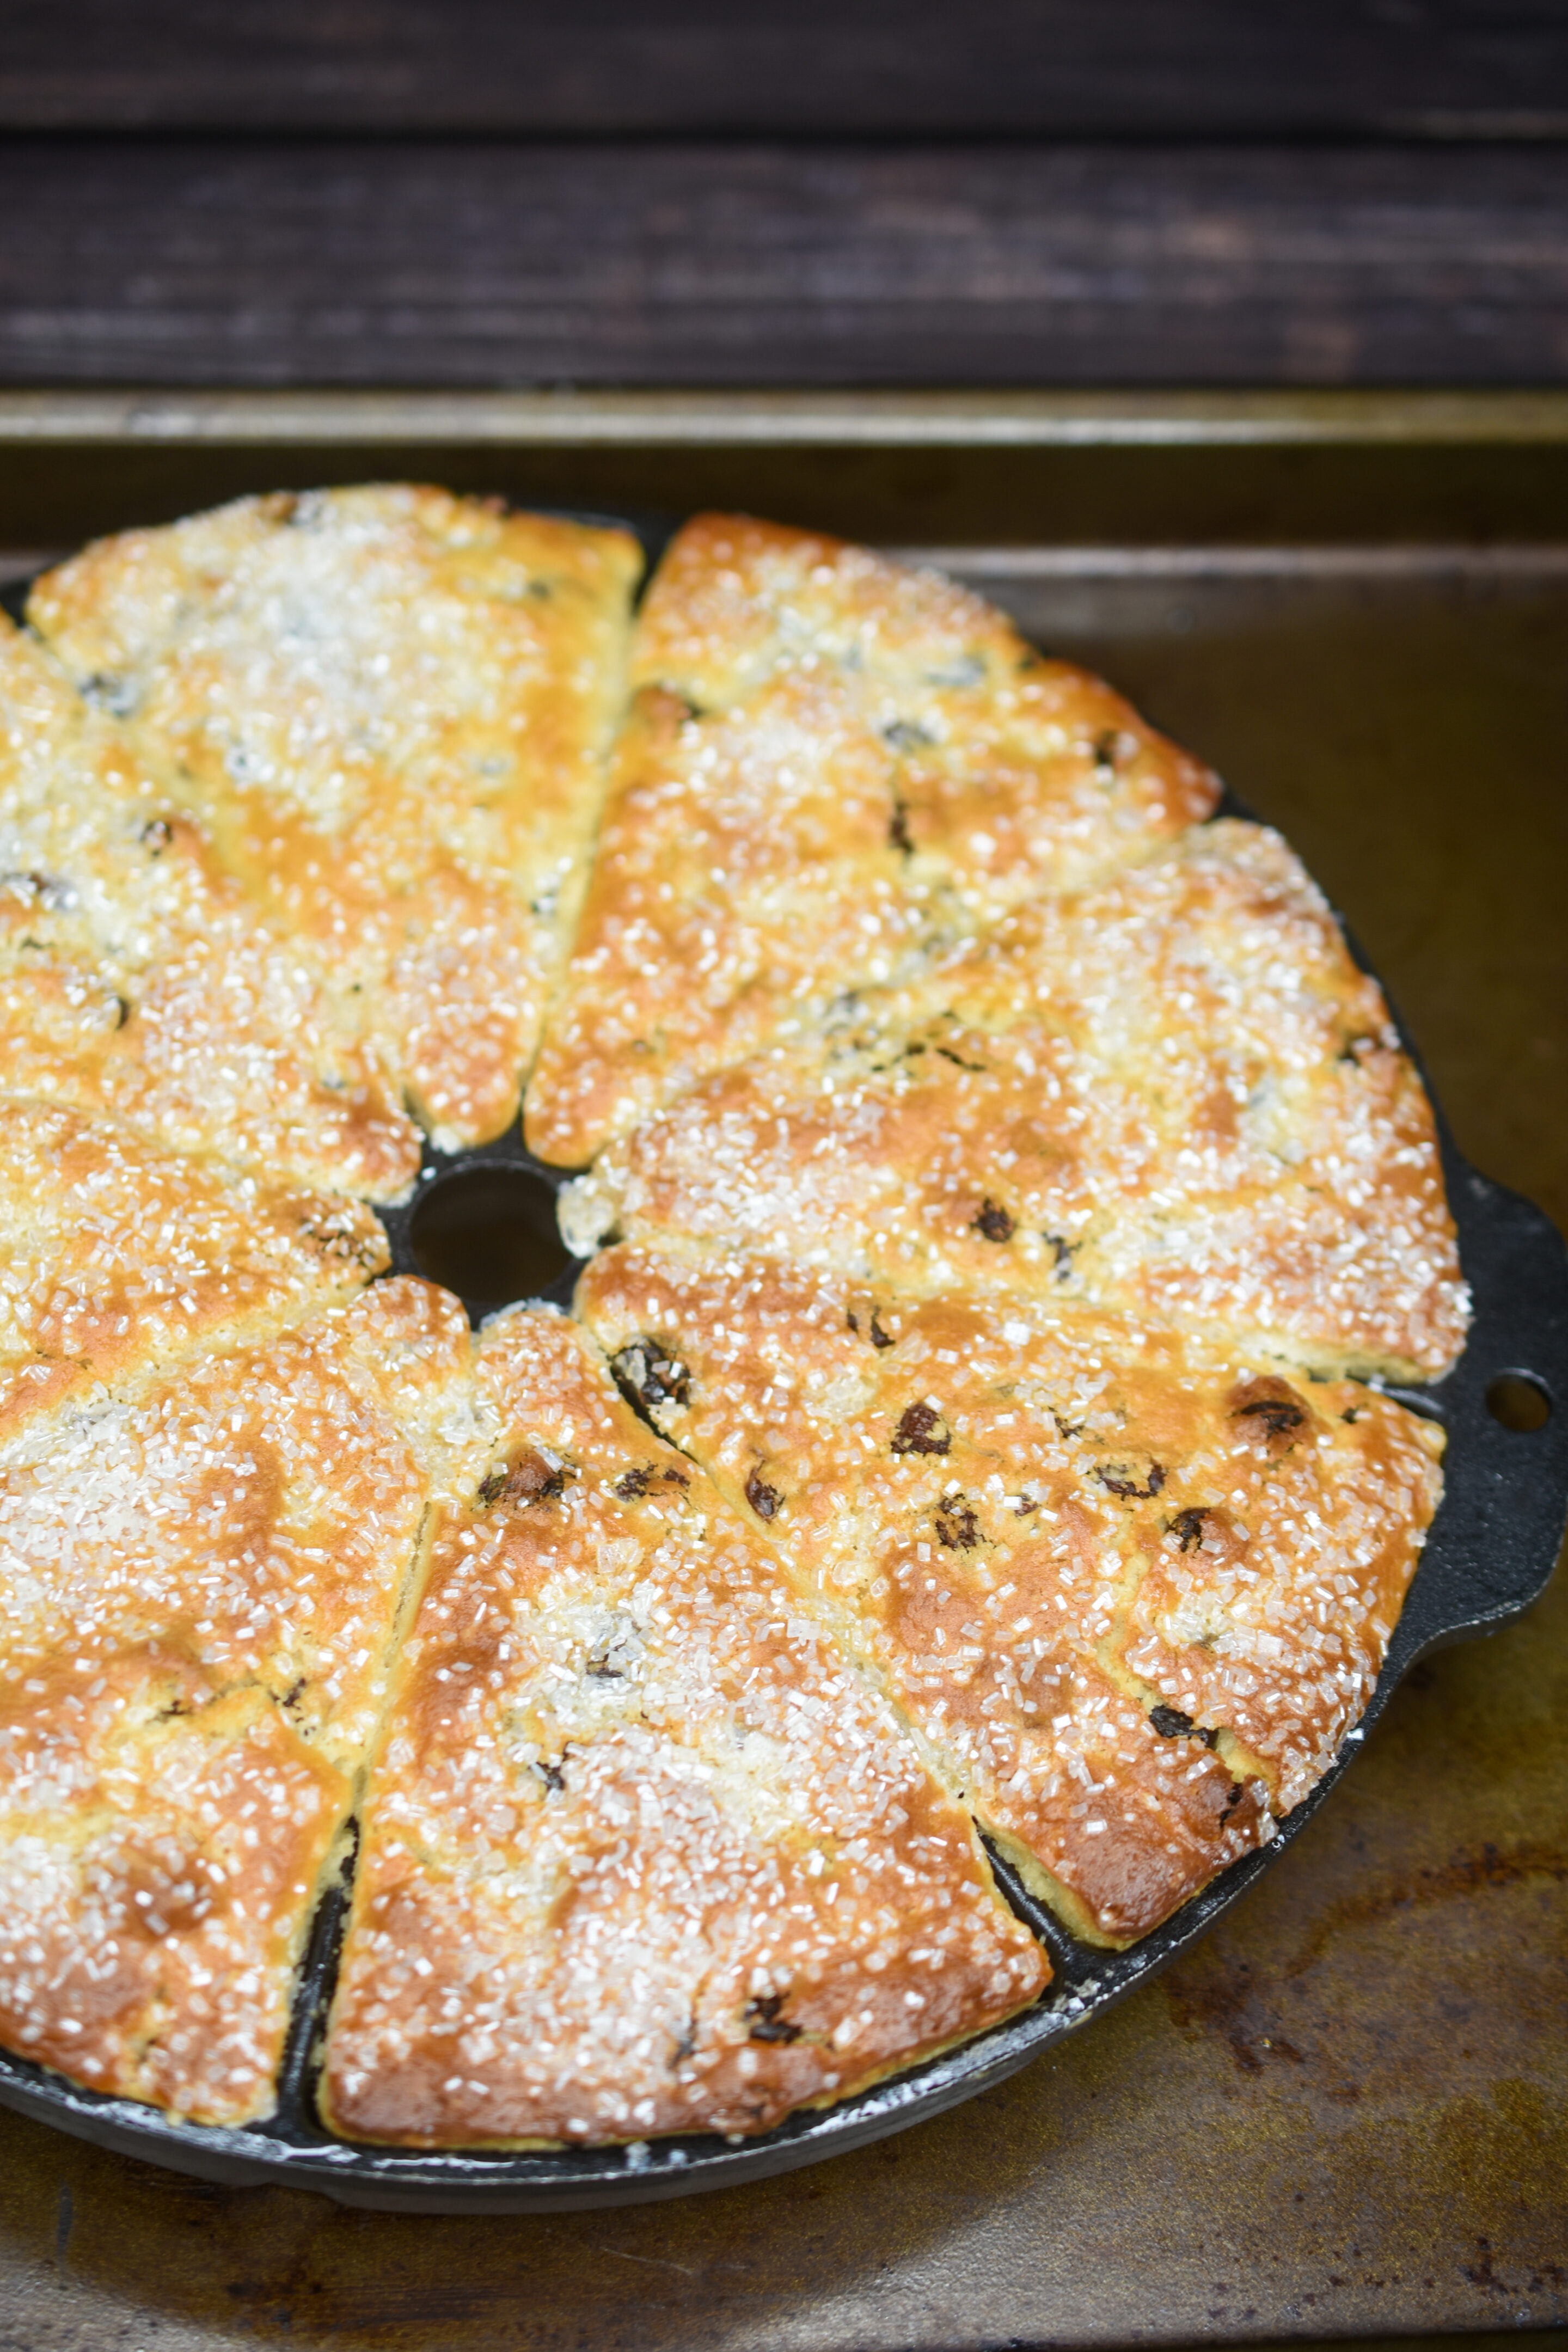 Raisin Scones baked in a scone pan